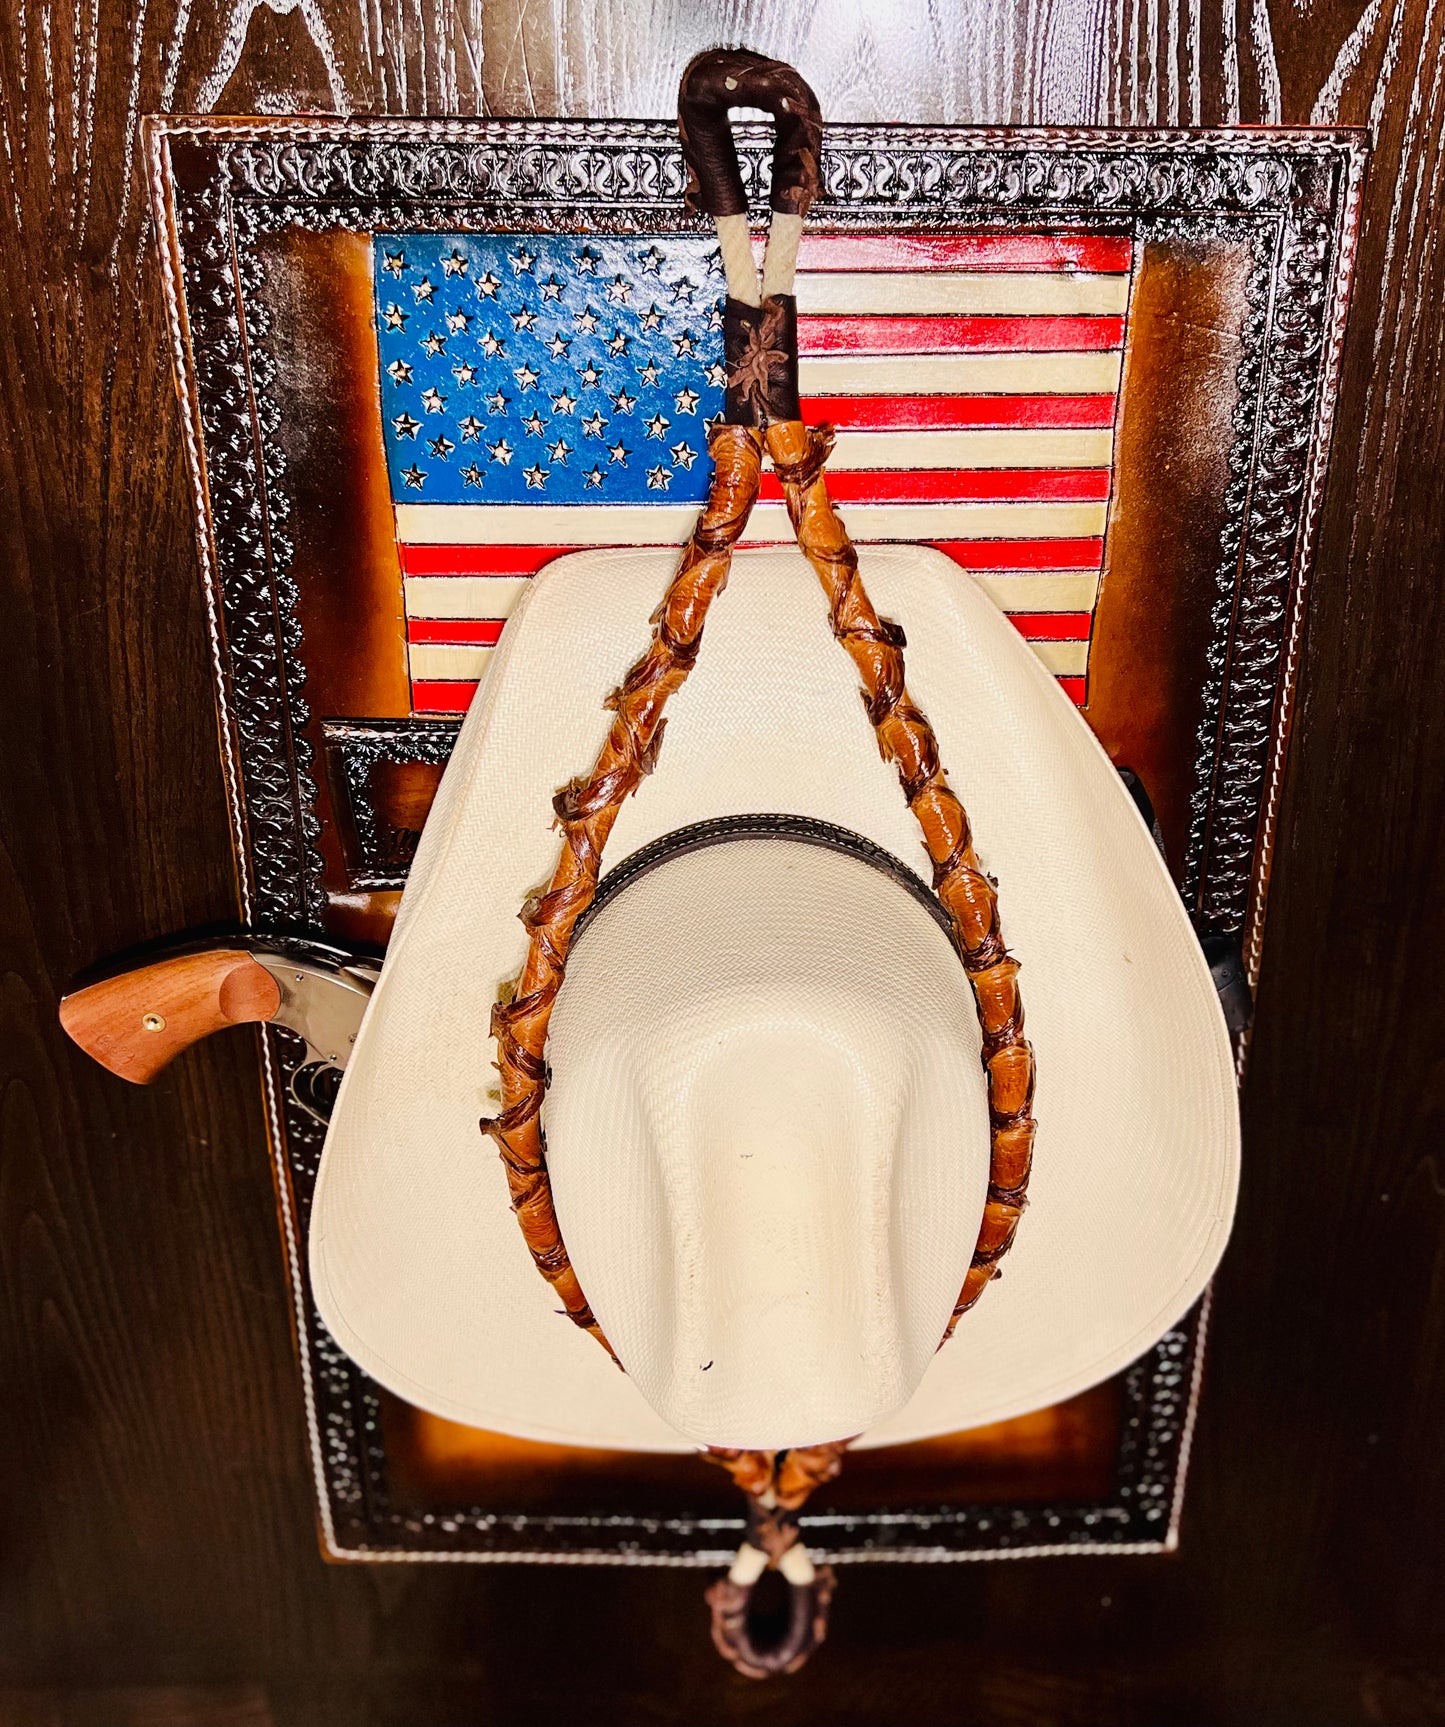 Jesse Marroquin’s Red, White, & Blue Cowboy Edition Gun Holster Cowboy Hat Rack.